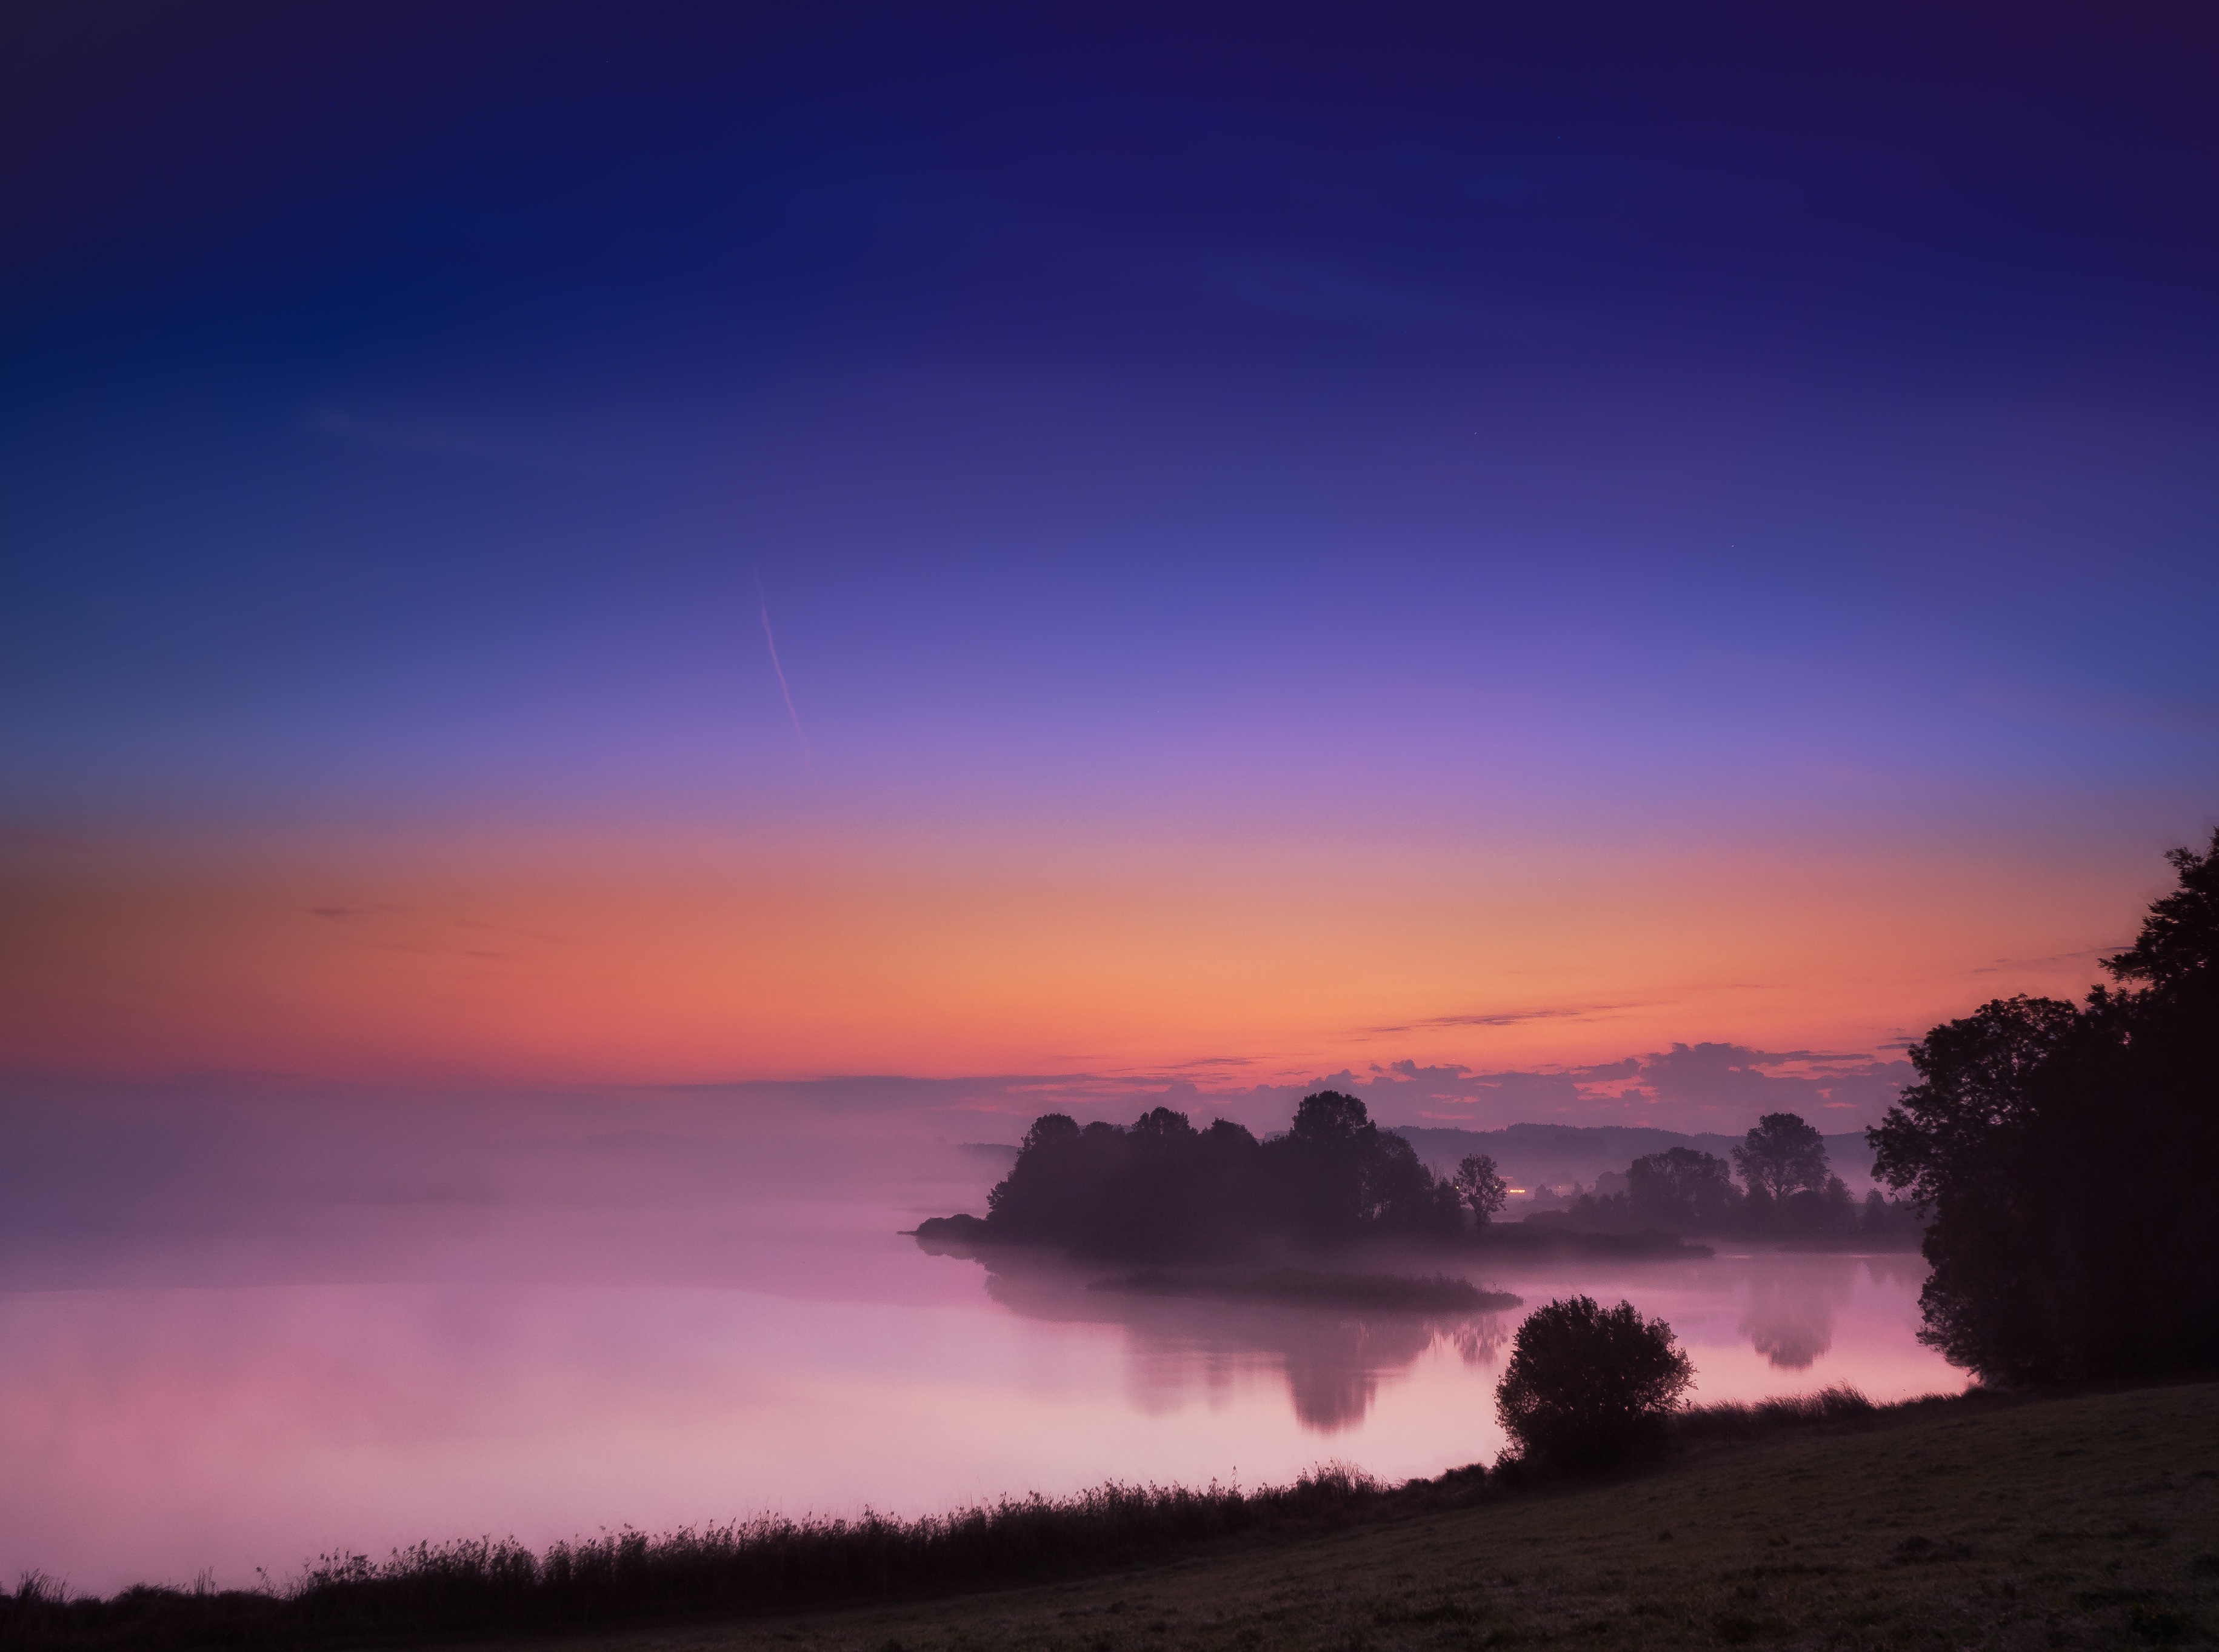 Morning Twilight, HD Nature, 4k Wallpaper, Image